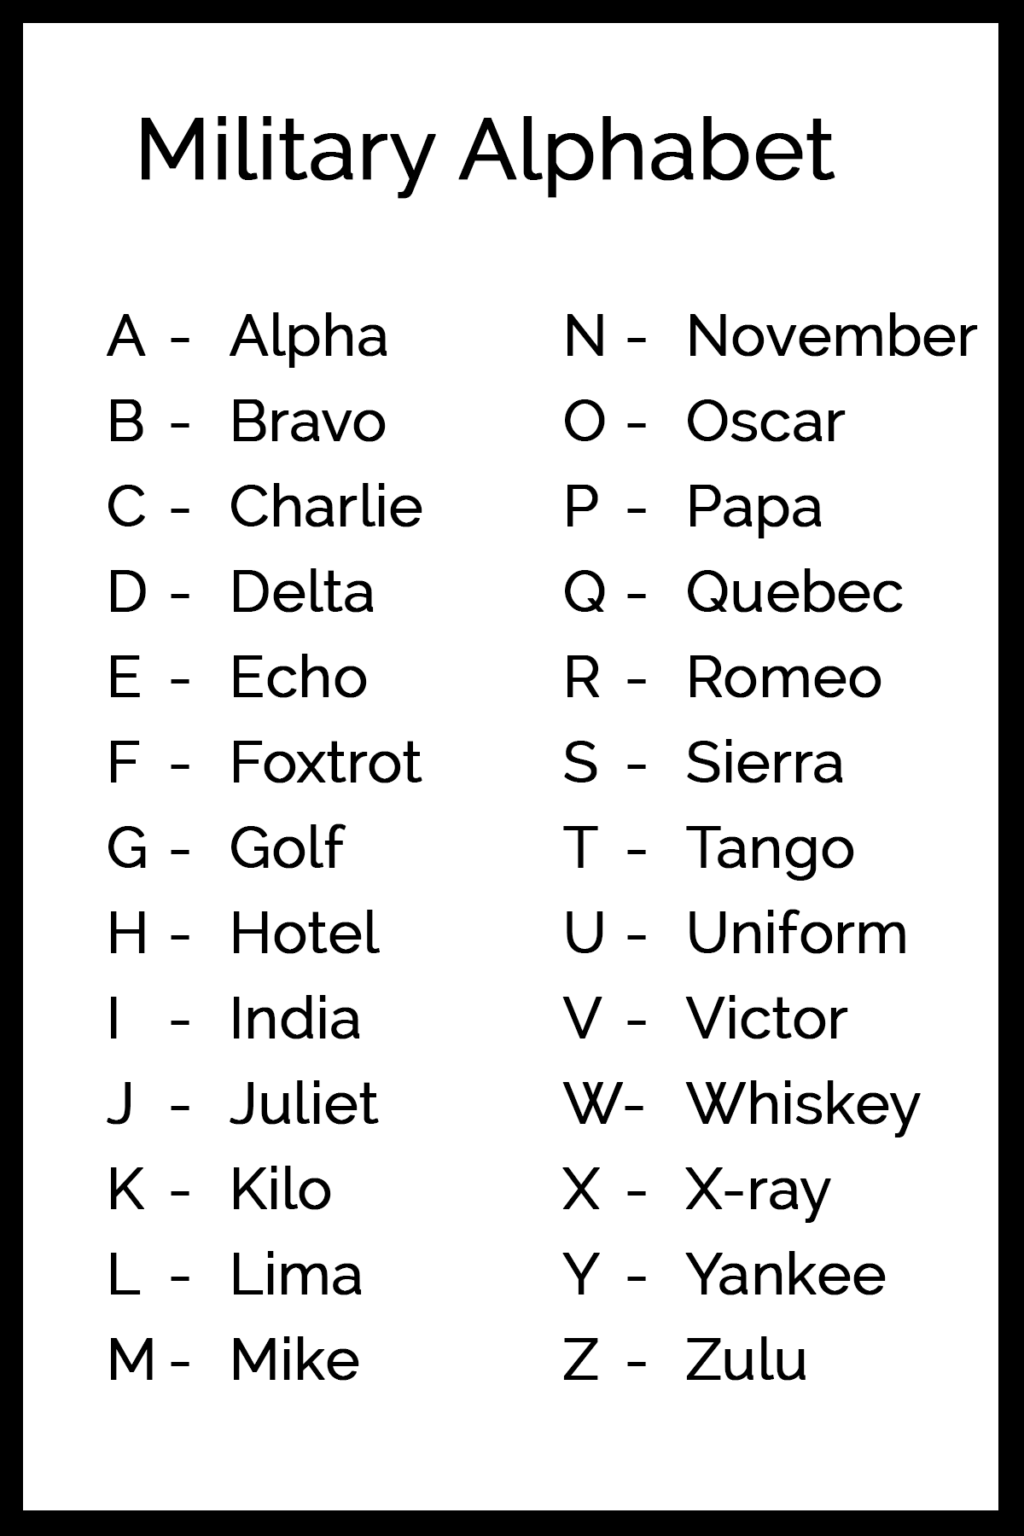 Military Alphabet Code